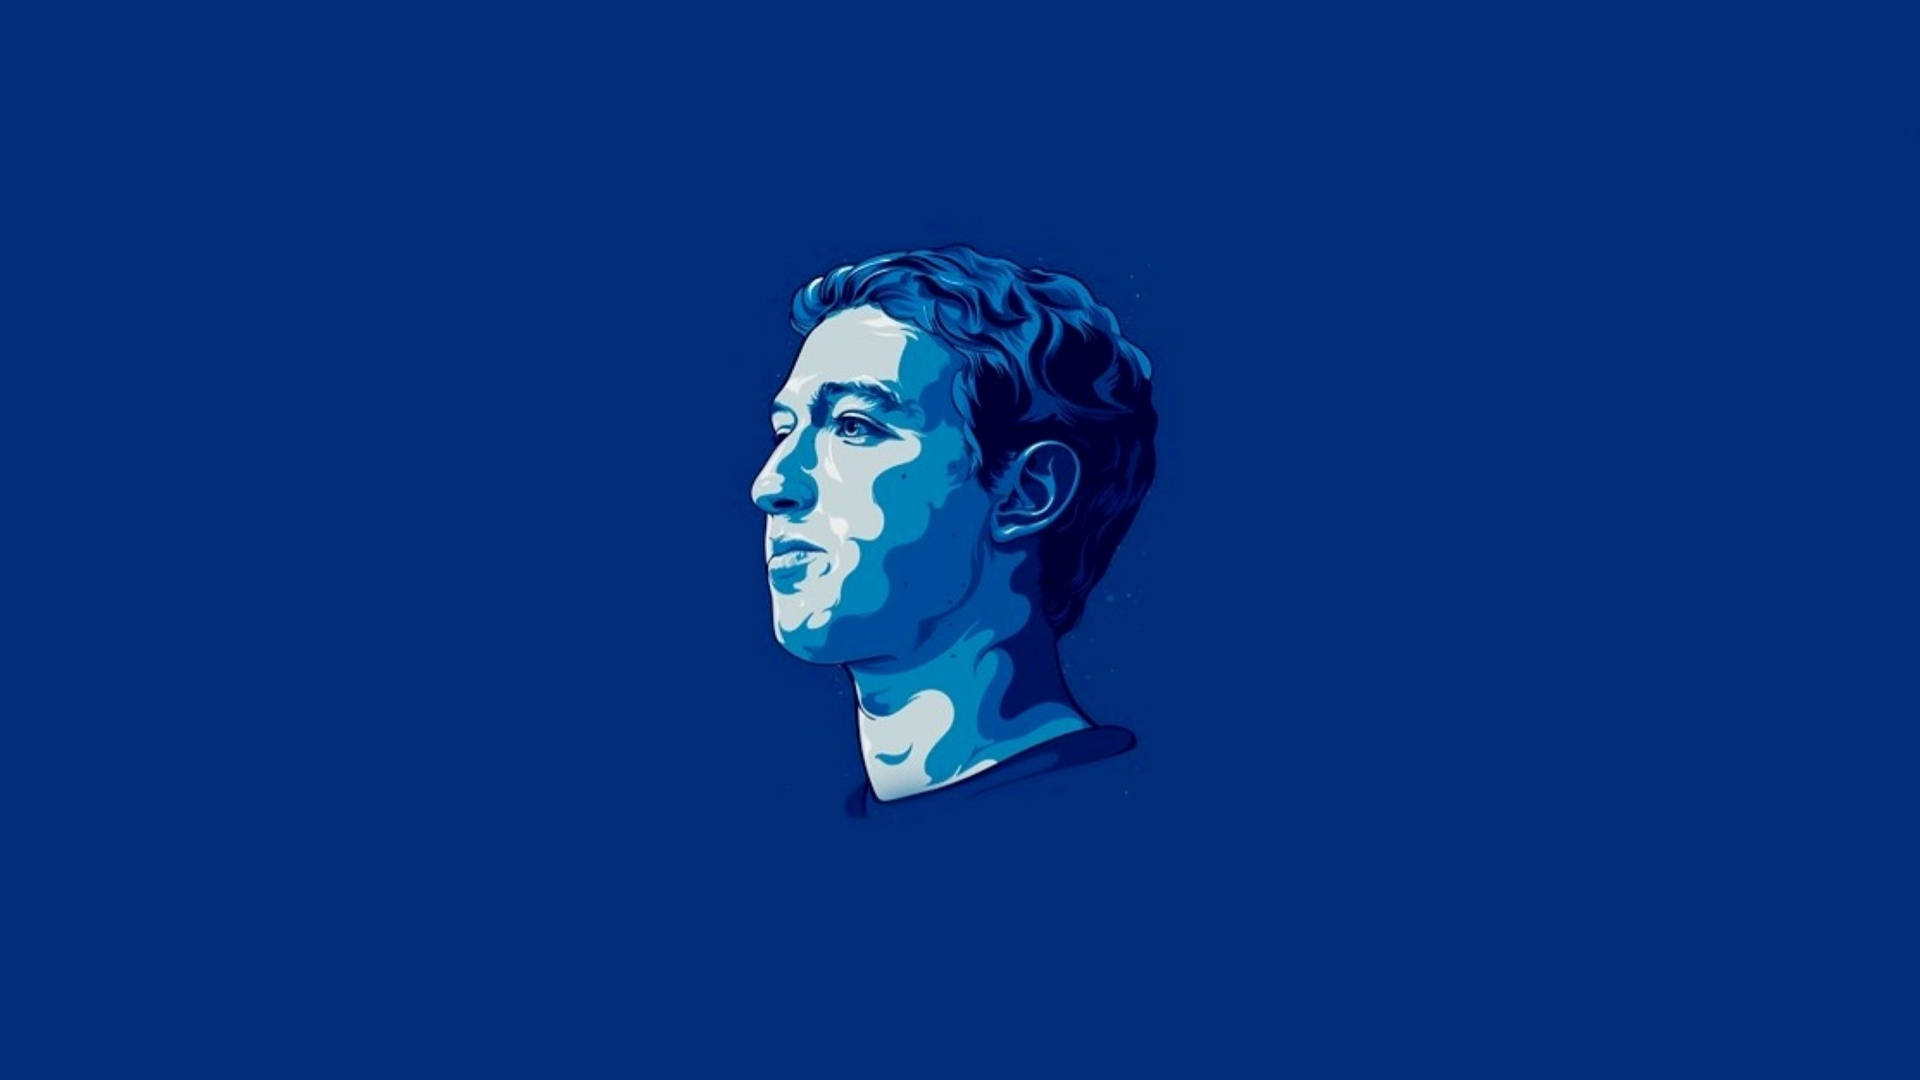 [100+] Mark Zuckerberg Wallpapers | Wallpapers.com